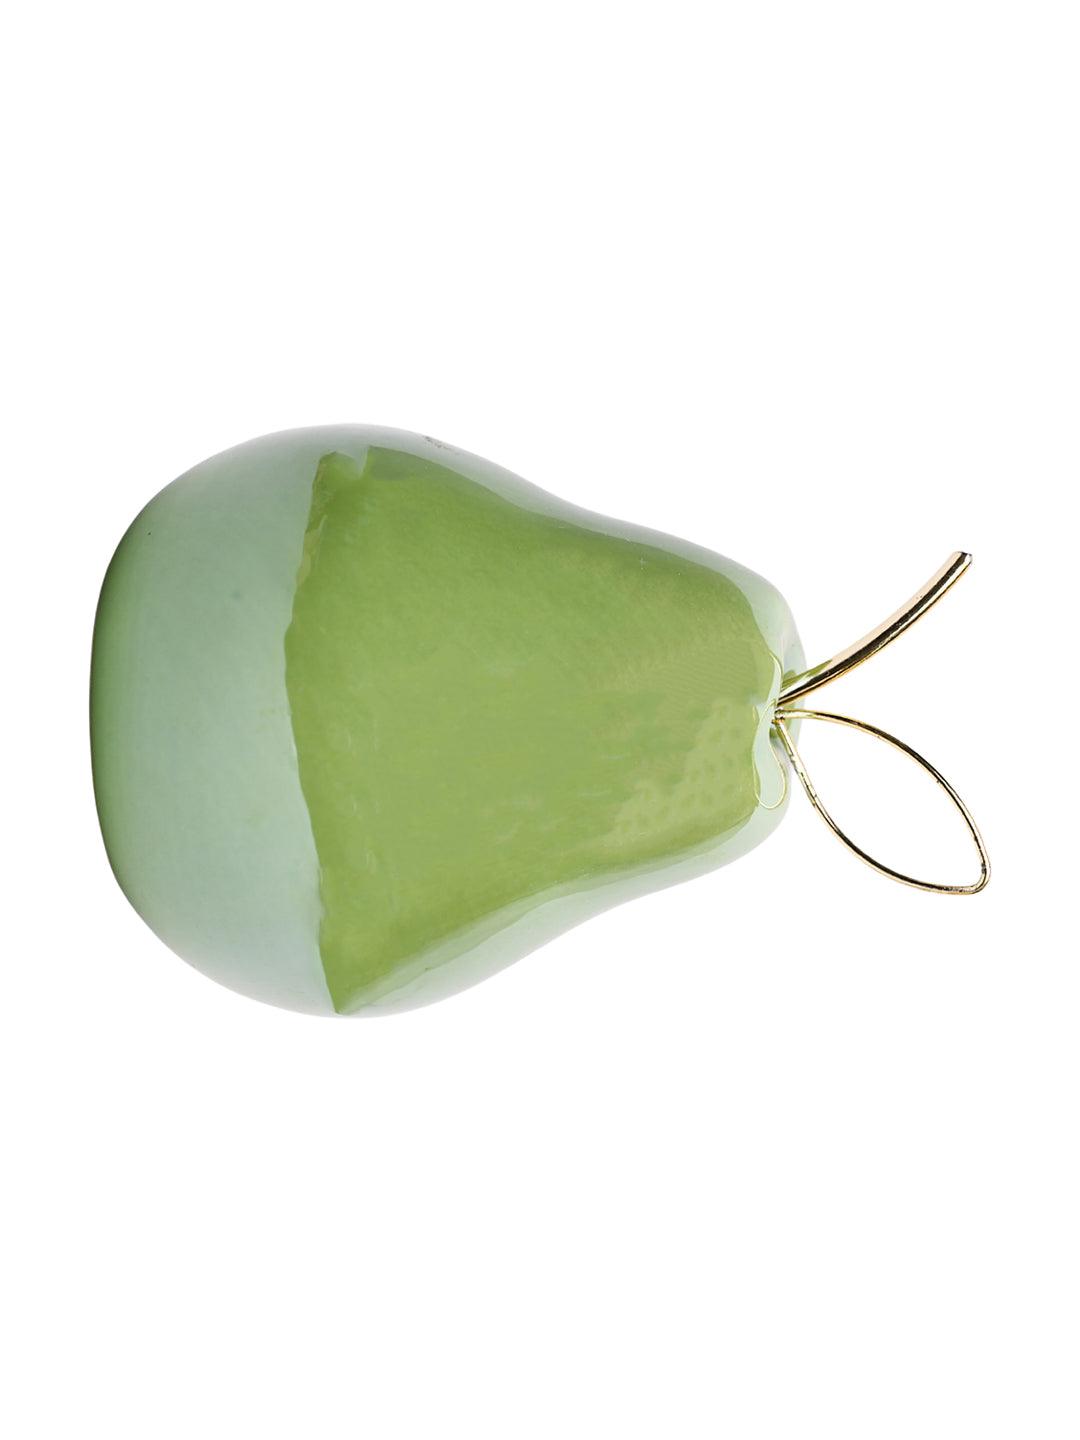 Decorative Ceramic Green Pear With Leaf - MARKET 99